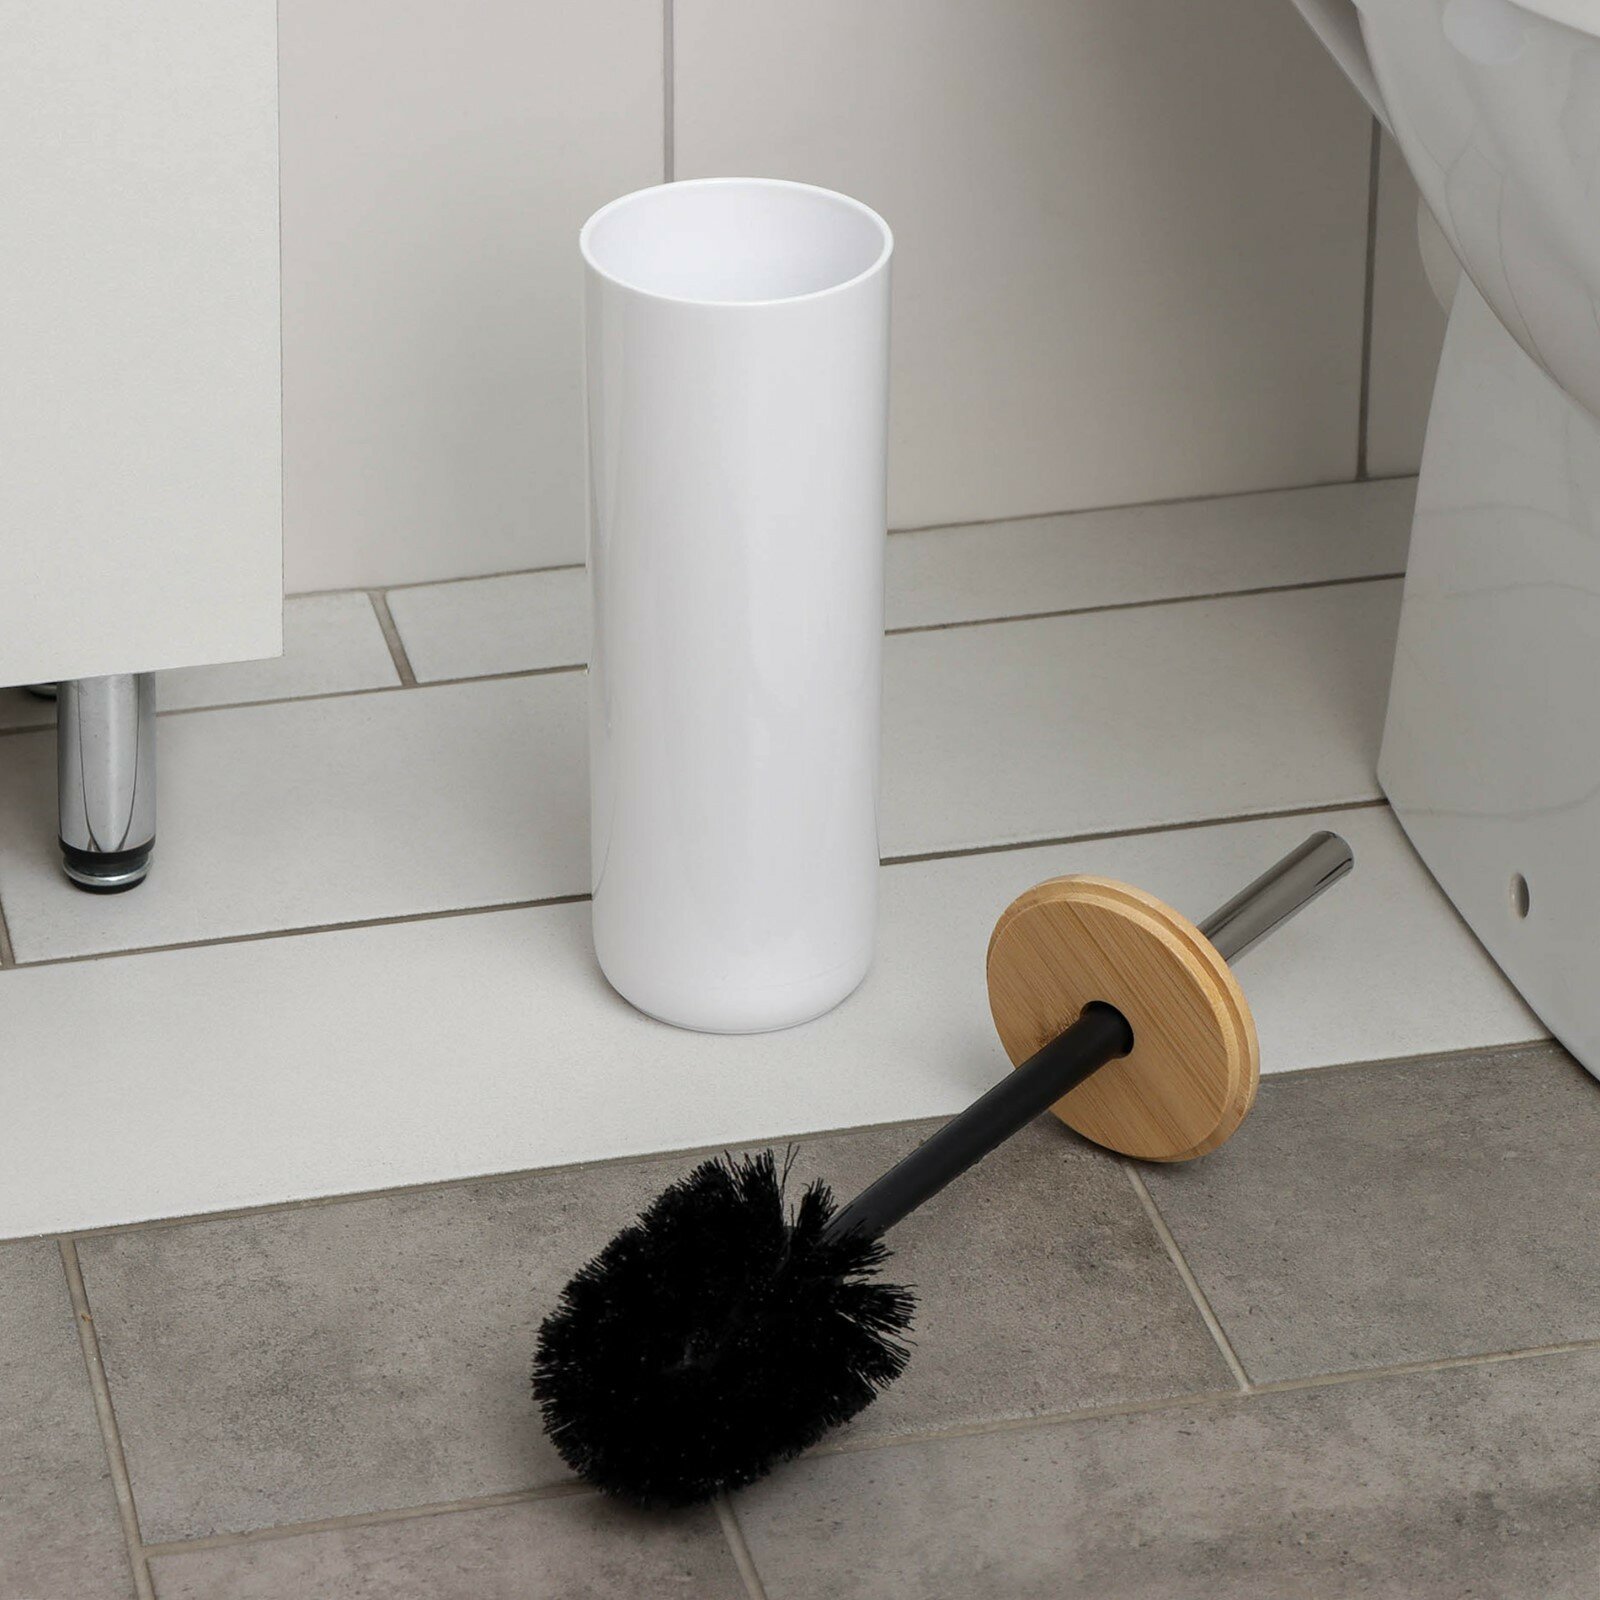 Ерш для туалета Альтернатива, Бамбук, напольный, с подставкой, пластик, белый, М8064